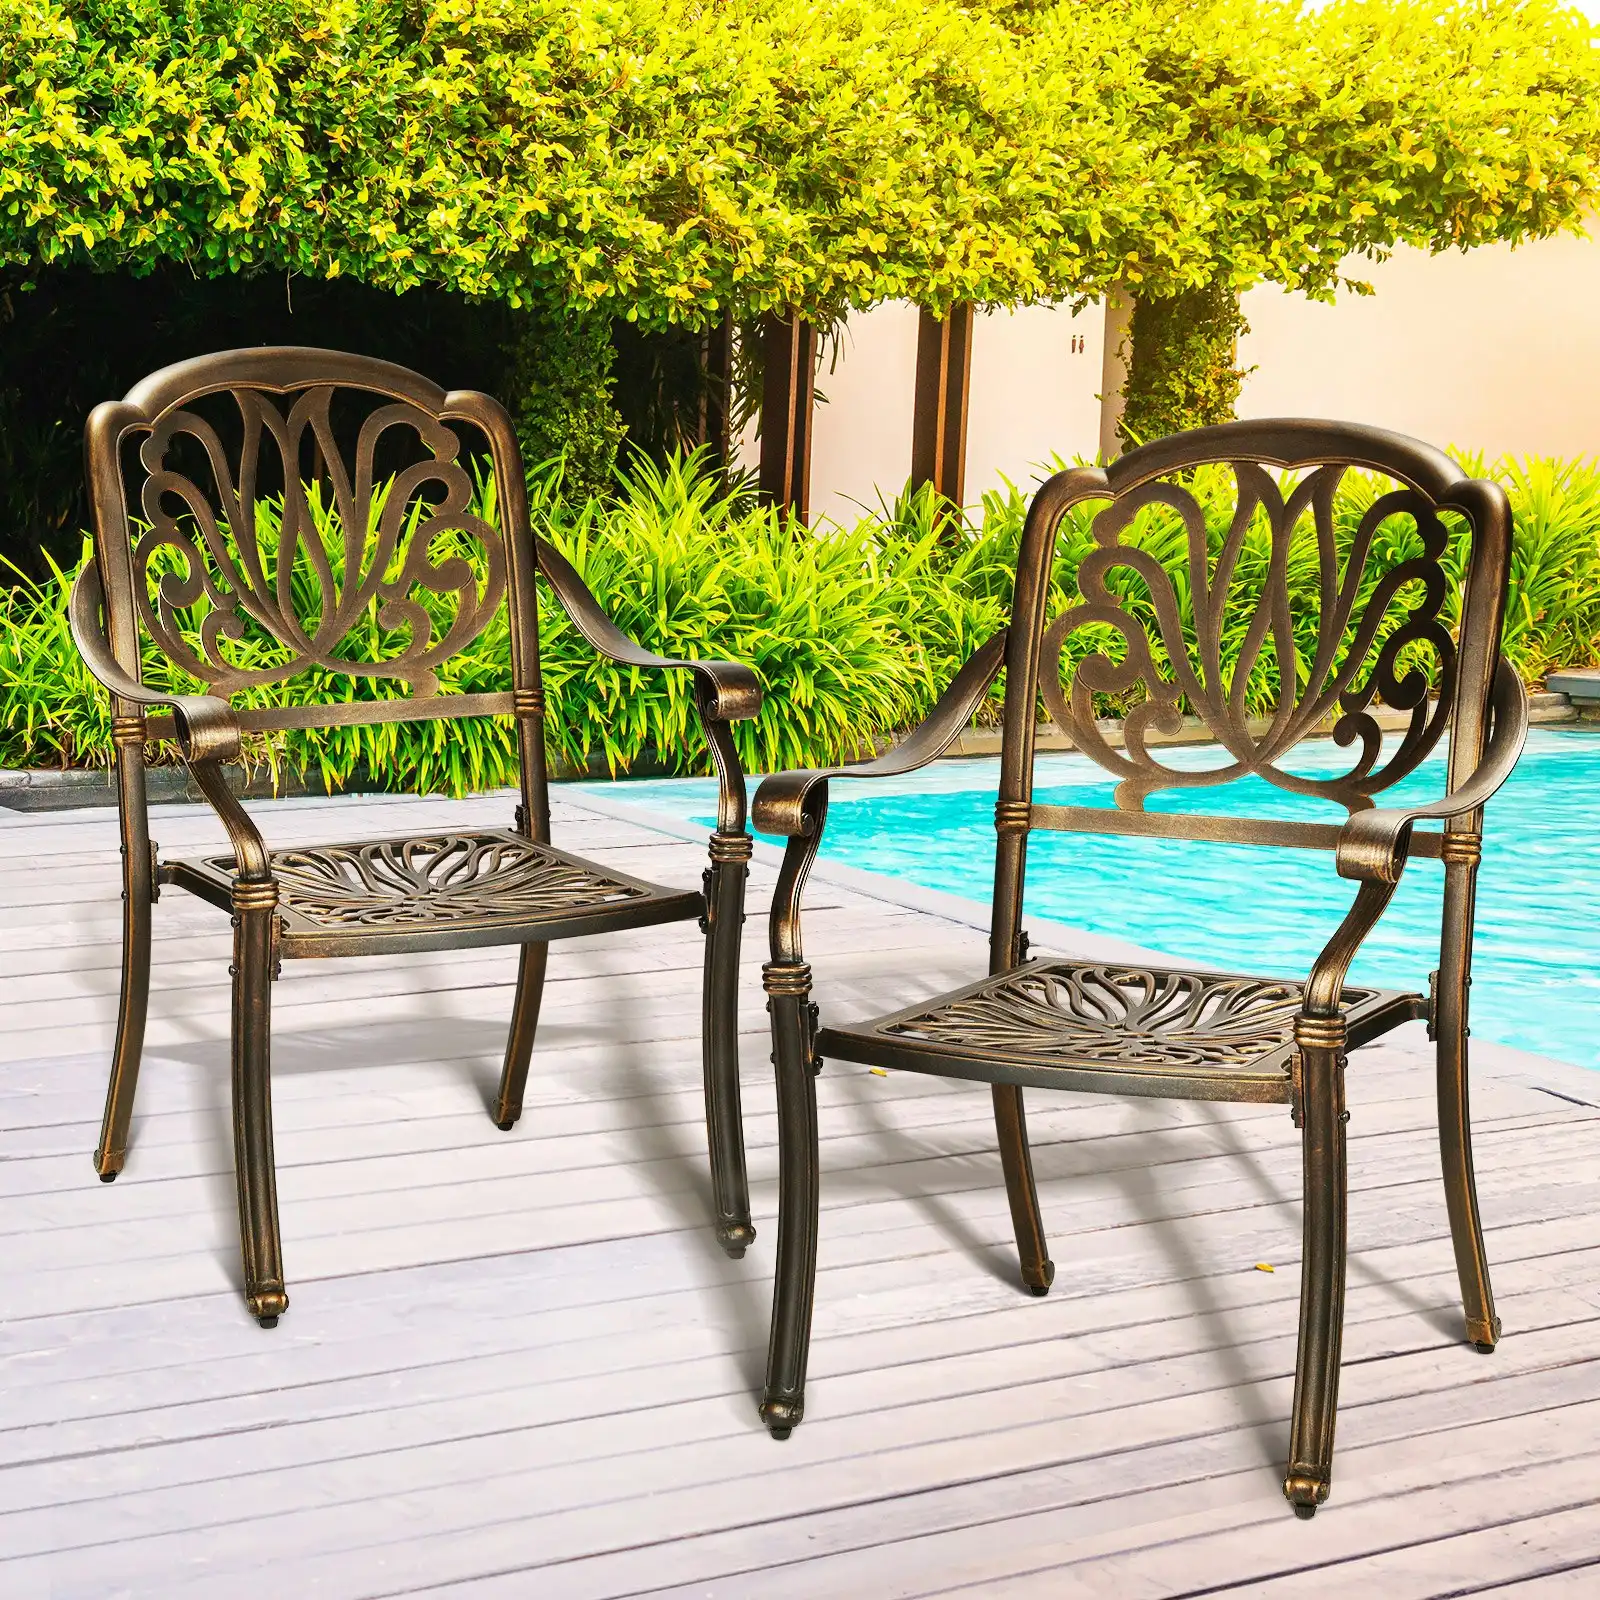 Livsip Outdoor Dining Chairs Cast Aluminium Patio Garden Furniture Set of 2